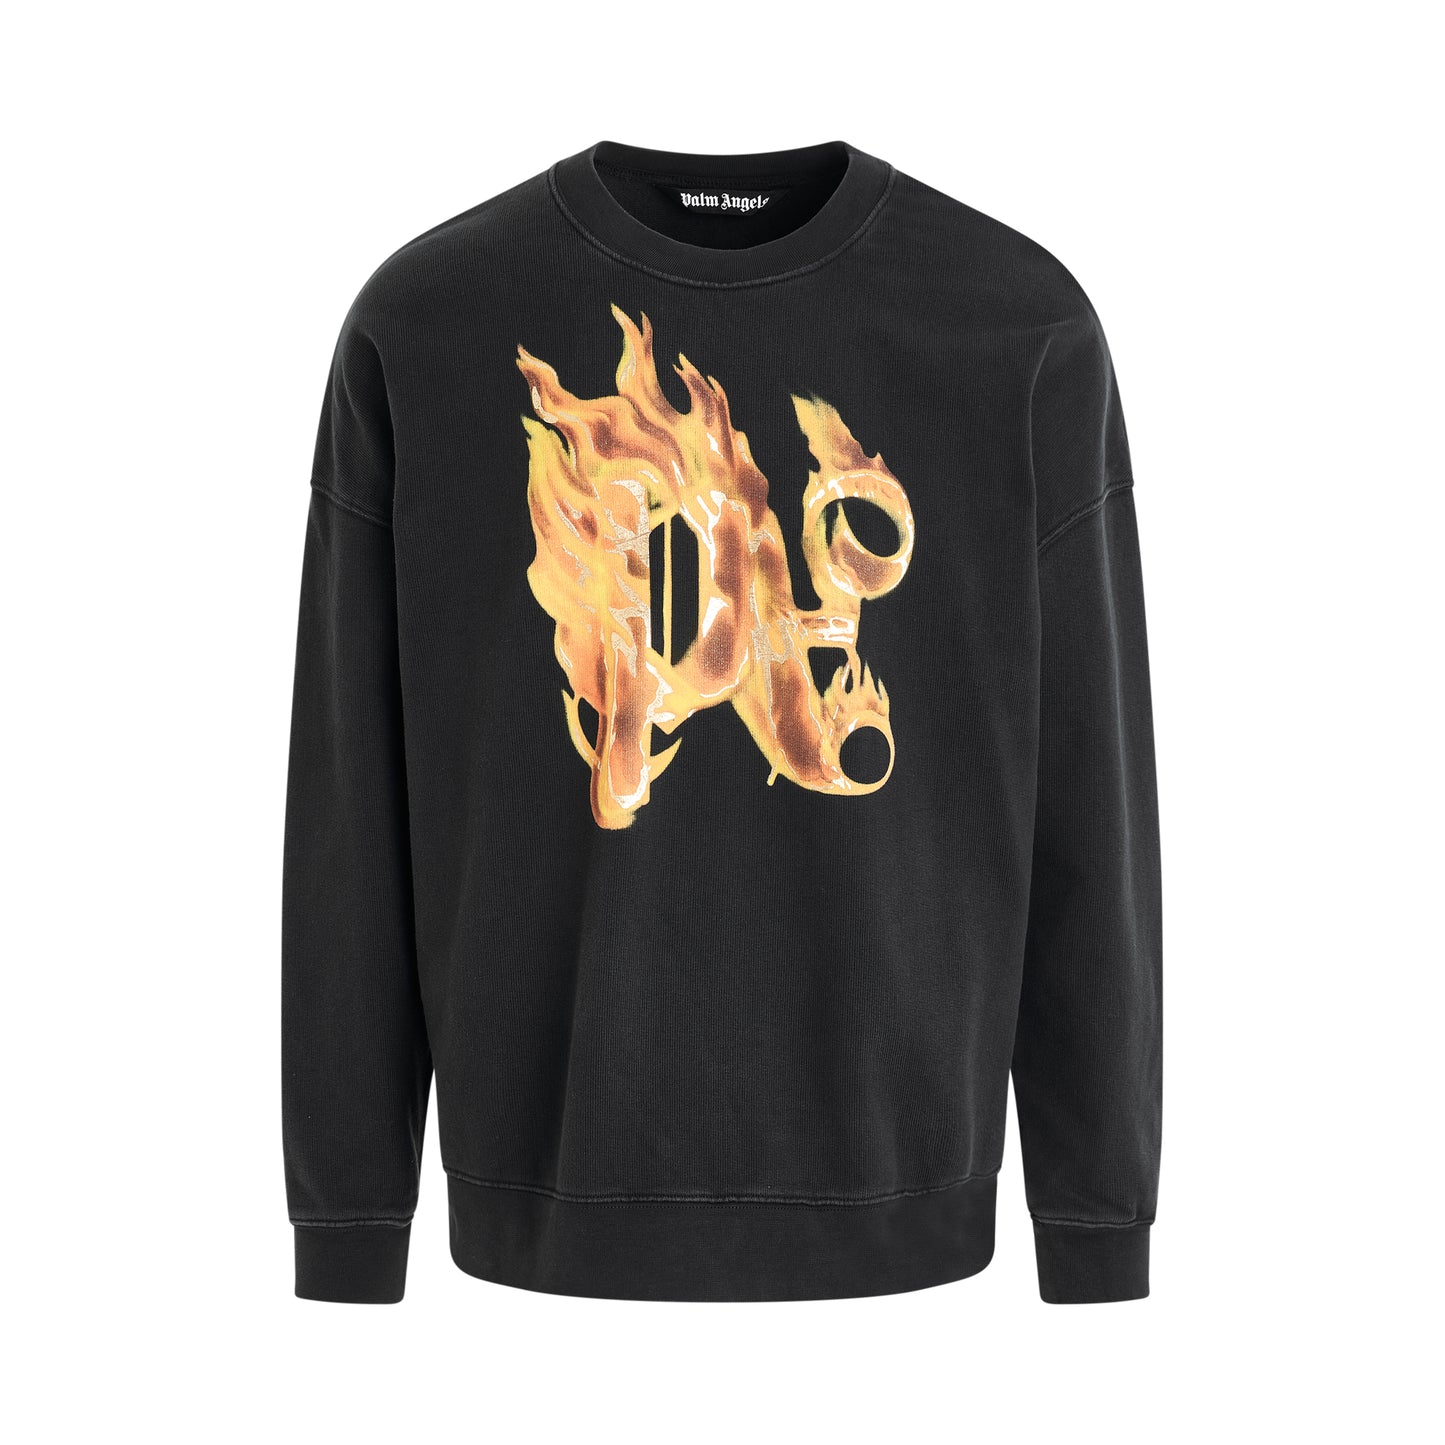 Burning Monogram Sweatshirt in Black/Gold